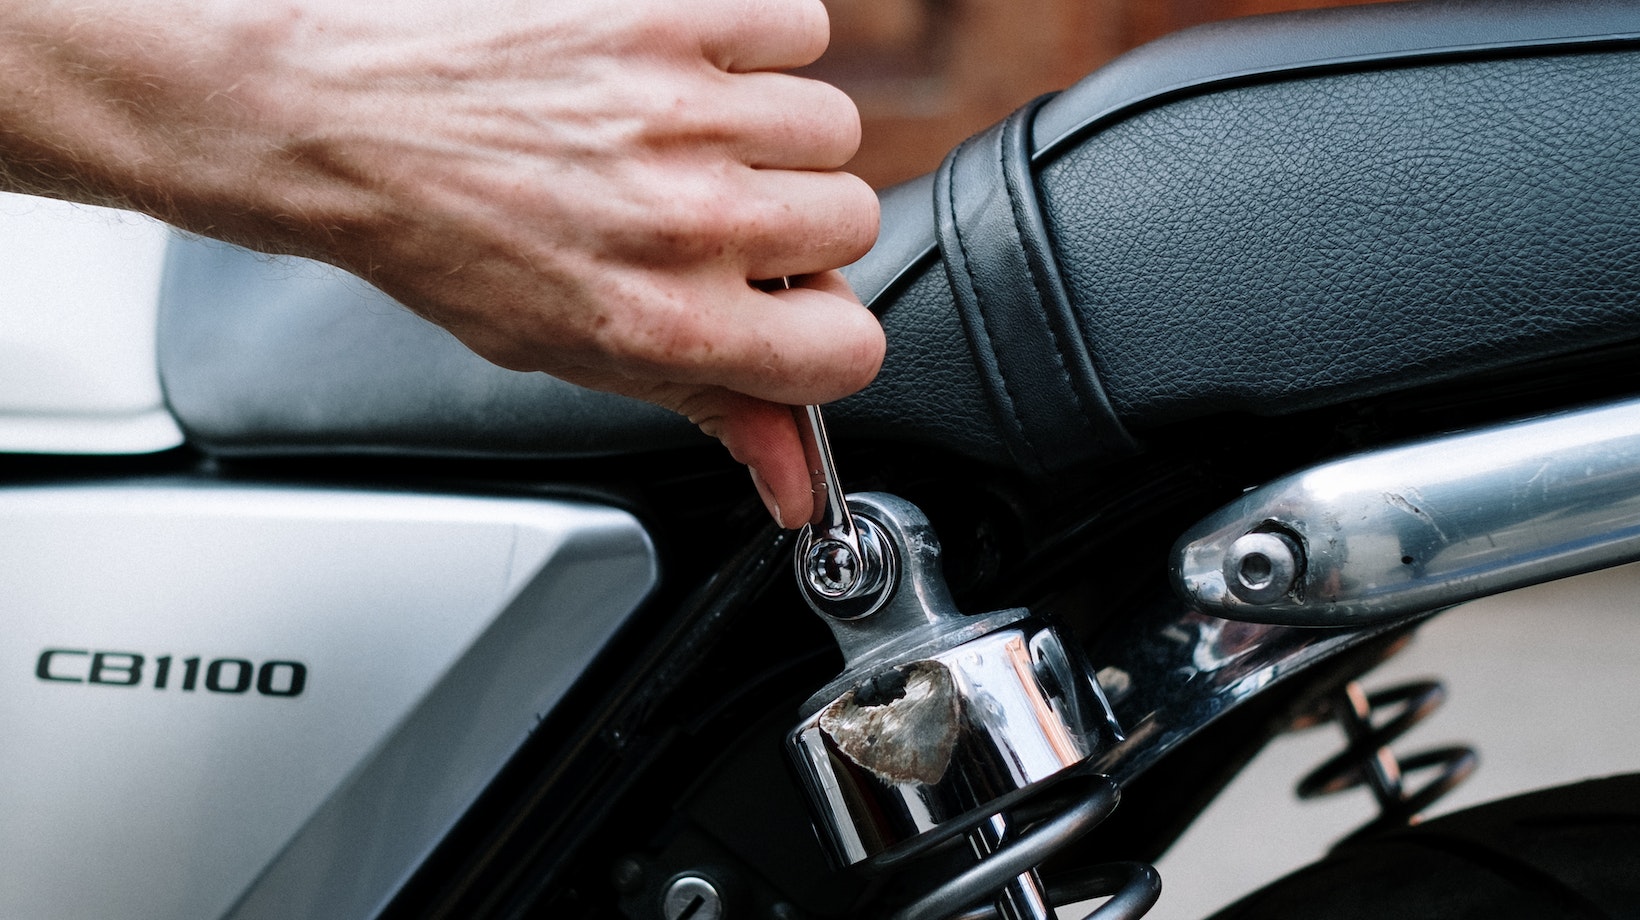 ebay honda motorcycle parts